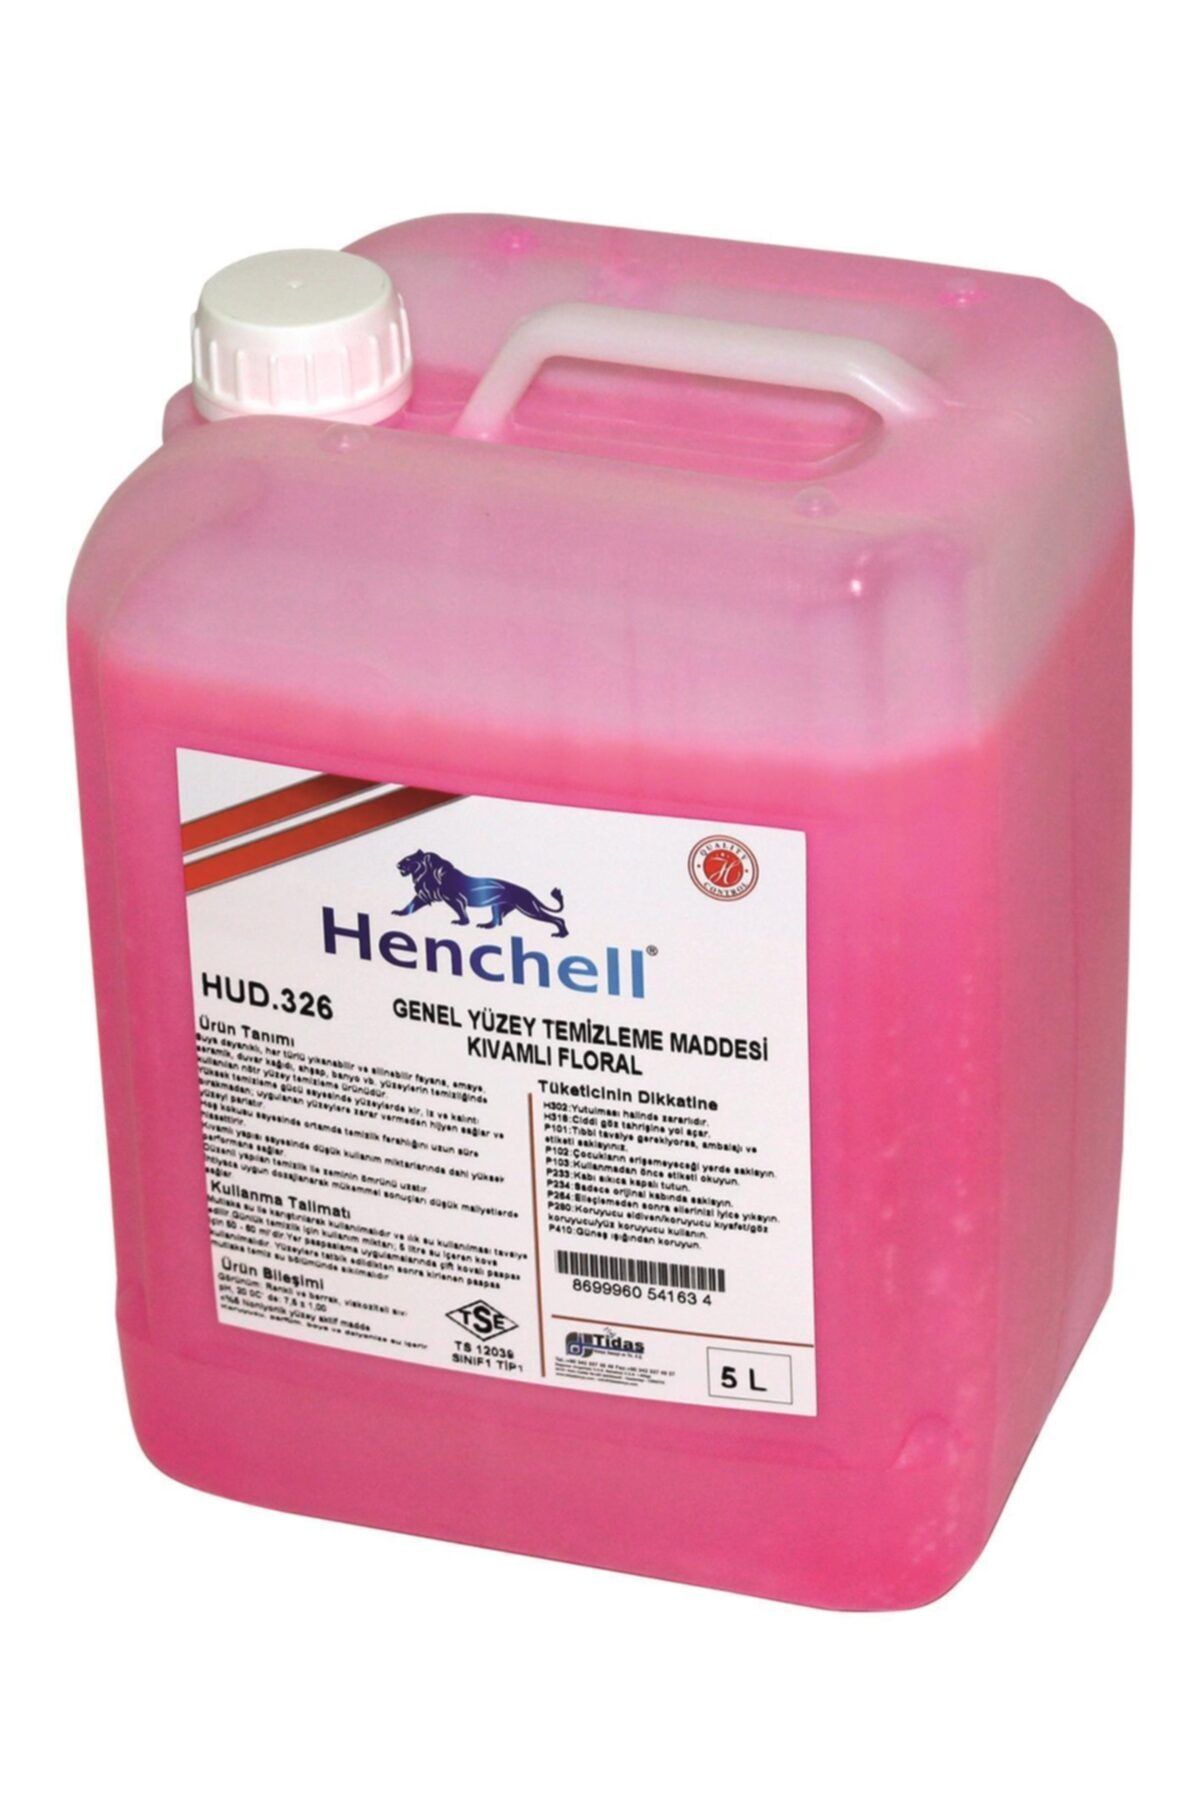 Henchell Genel Yüzey Temizleme Maddesi Floral-ultra 5kg